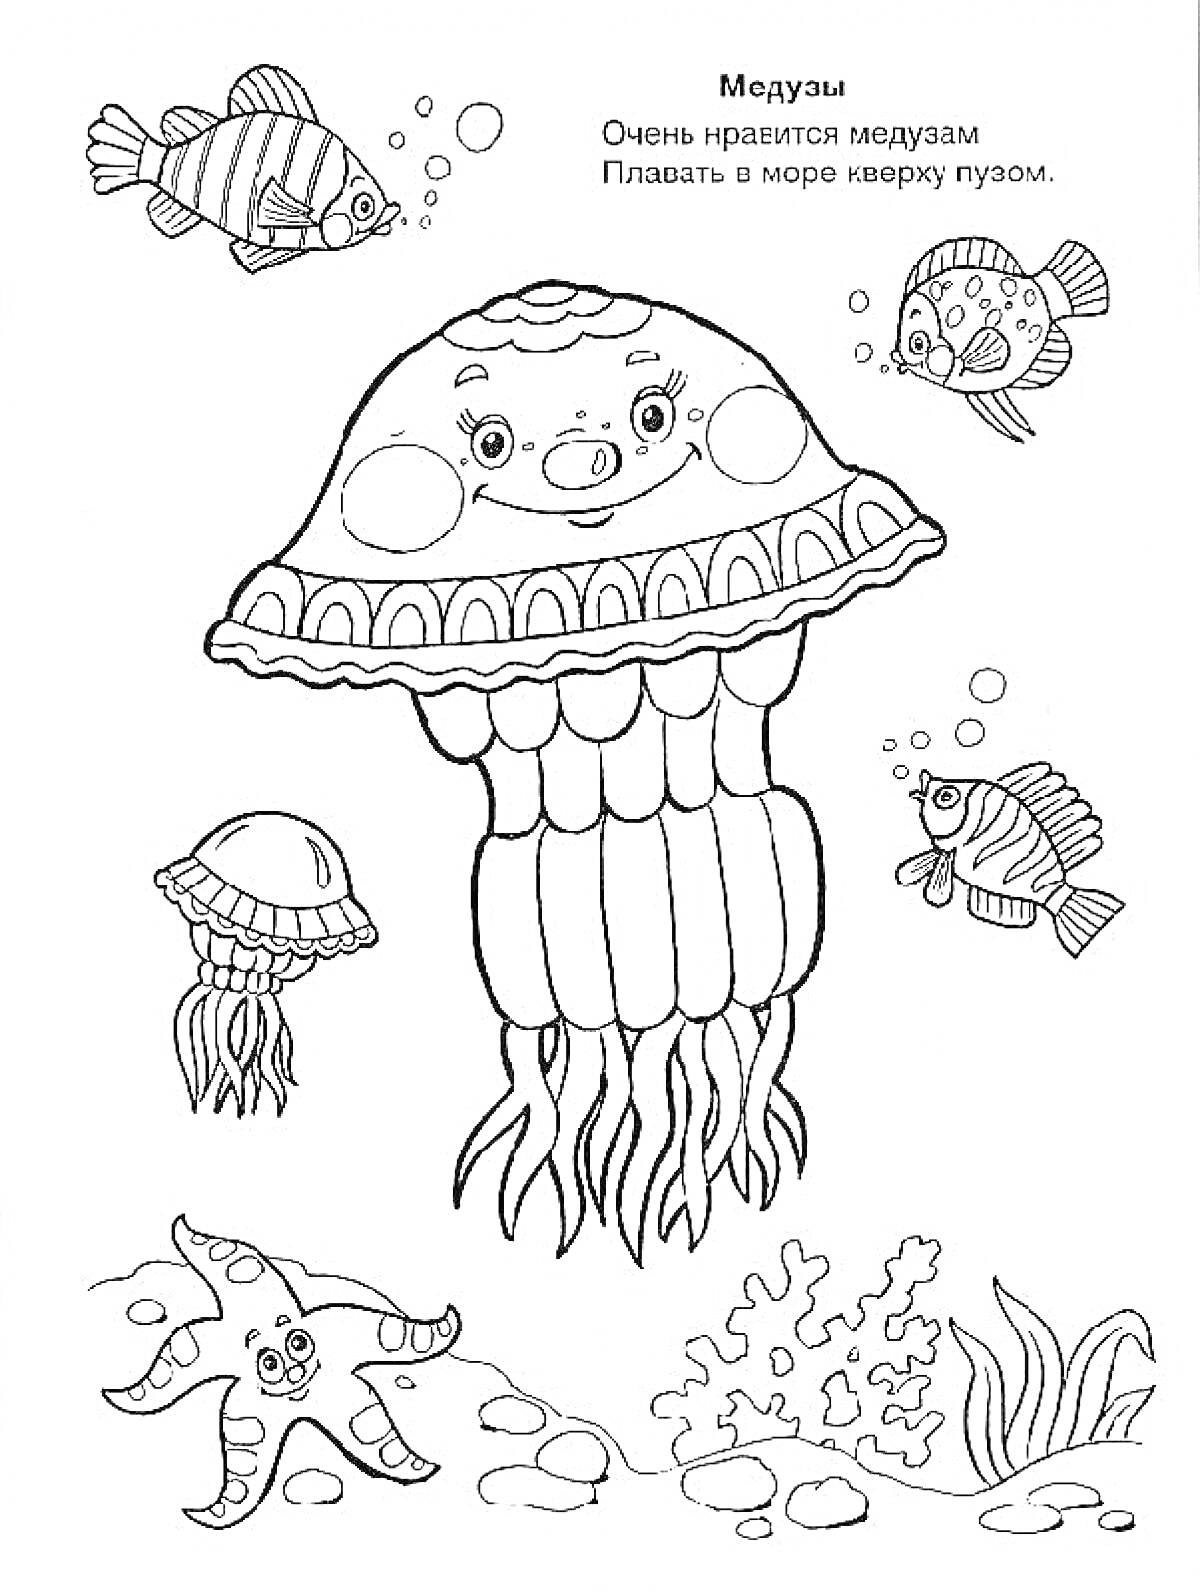 Медуза, рыбы, морская звезда, кораллы и камни